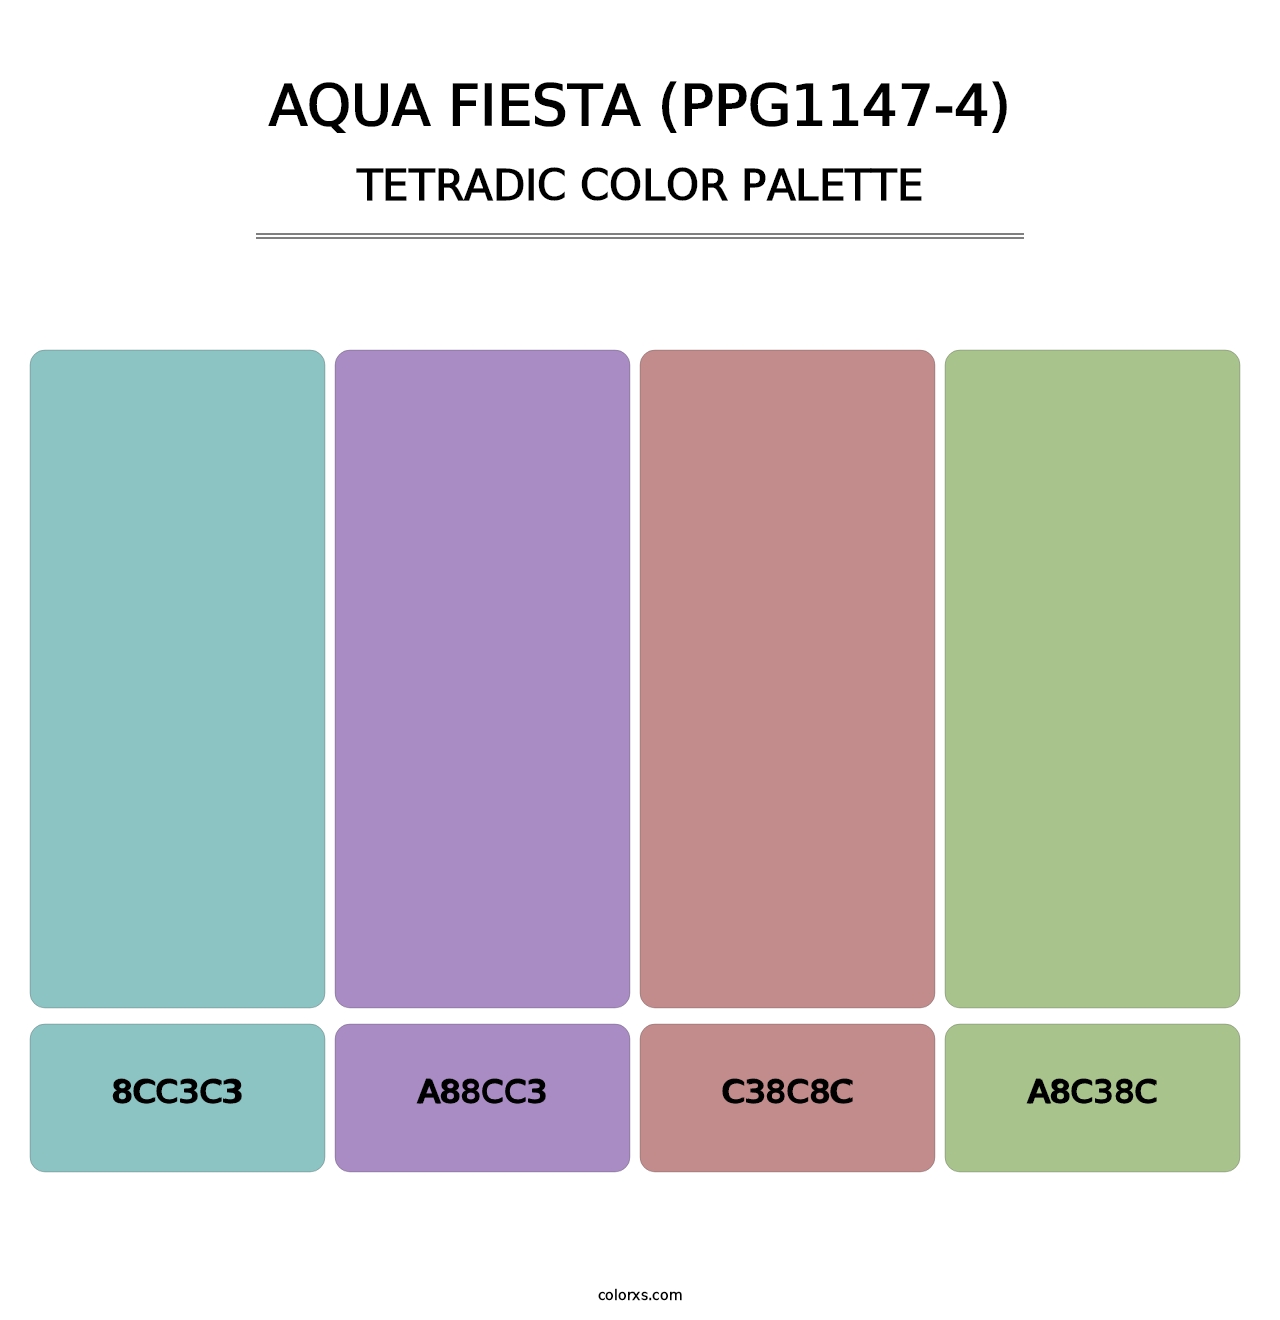 Aqua Fiesta (PPG1147-4) - Tetradic Color Palette